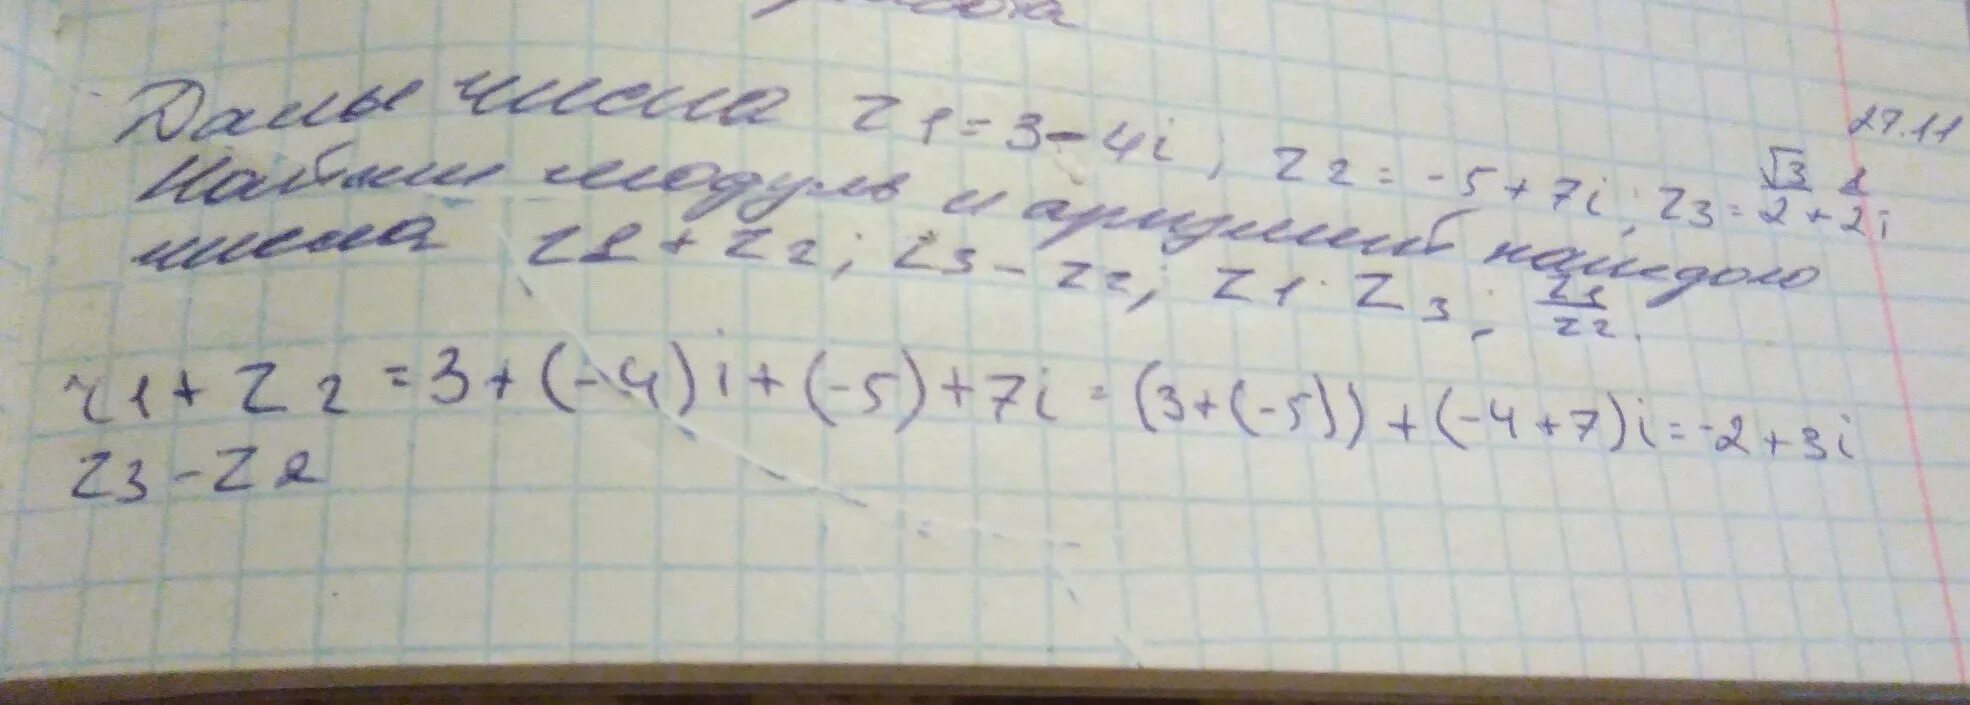 Z1 2 3i. Модуль z1*z2 = модуль z1* модуль z2. Z1=4+3i. Z1=. Корень 3/2-1/2i и z2=3i. Модуль комплексного числа z= 4 + 3i.